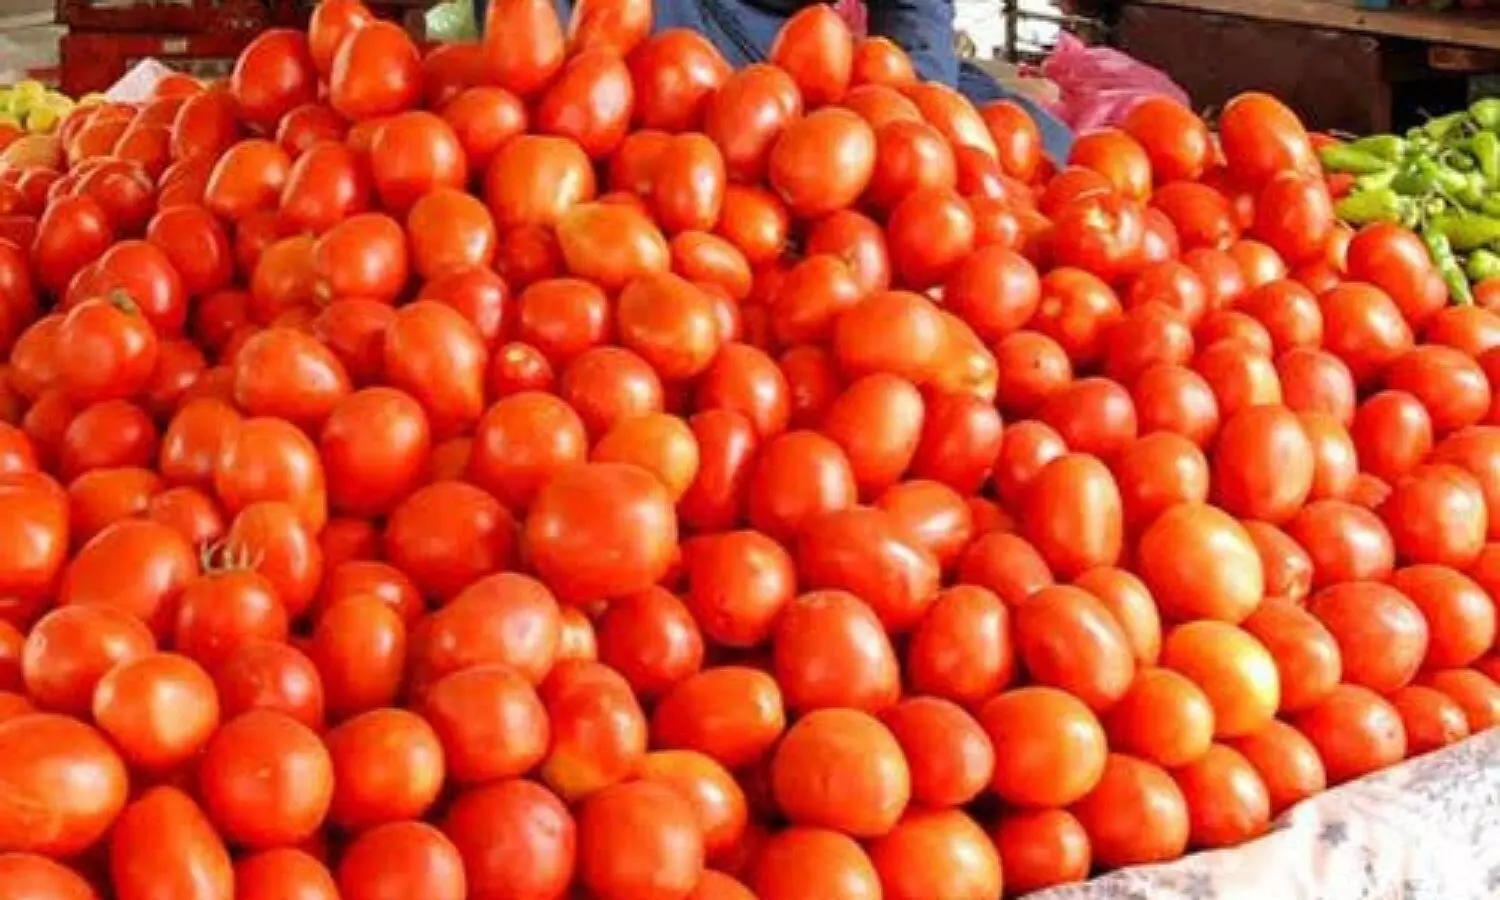 Tomato price increased